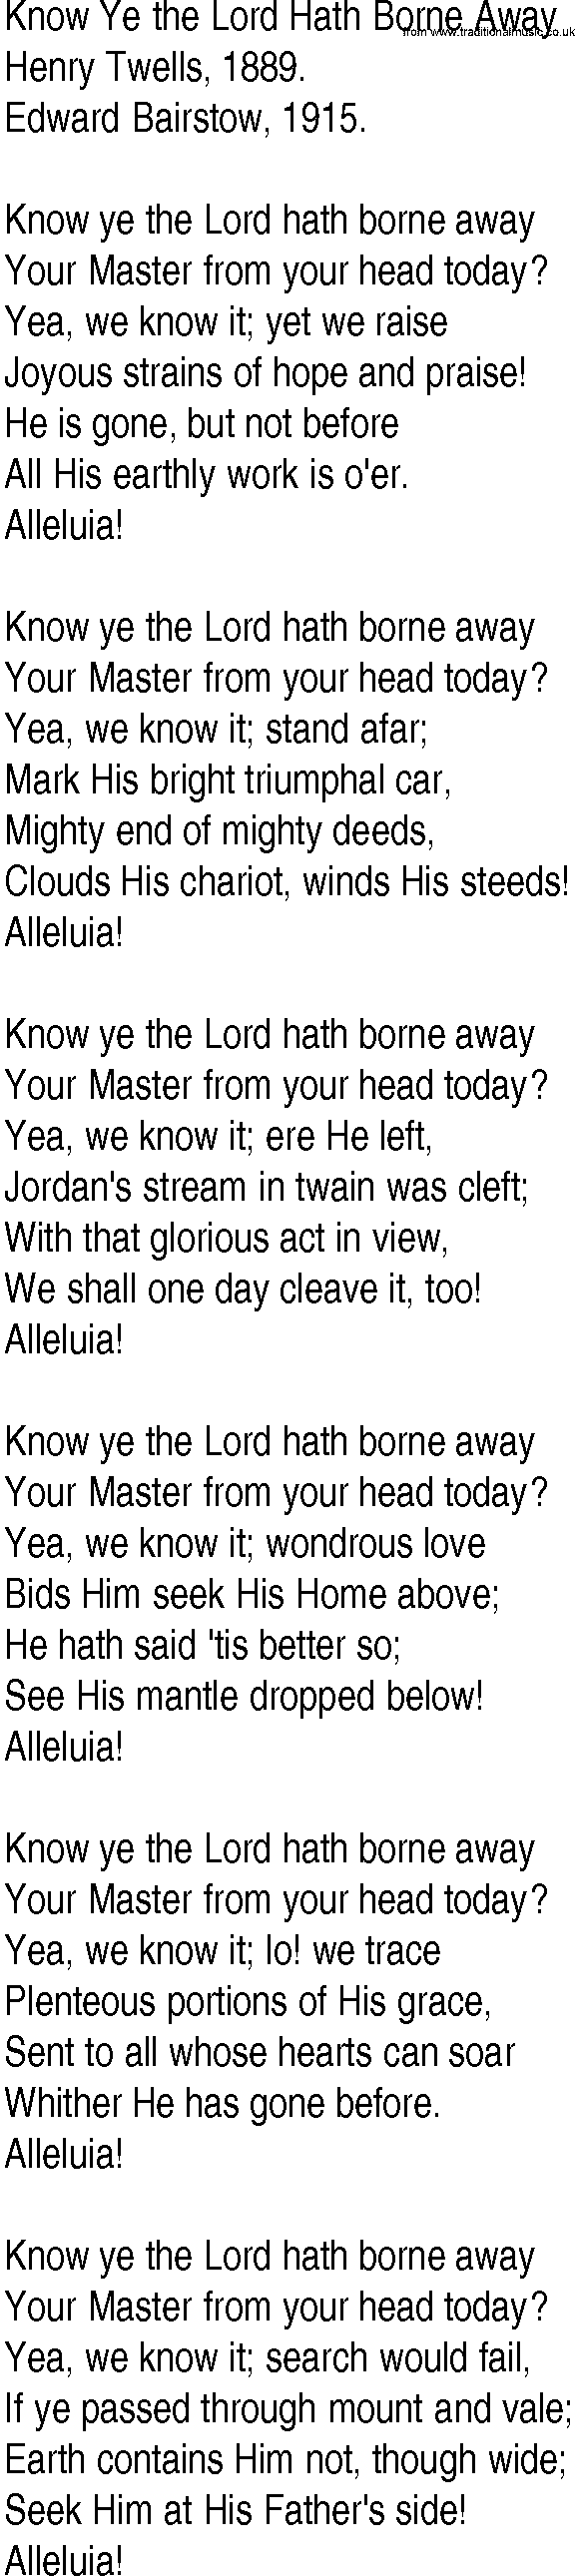 Hymn and Gospel Song: Know Ye the Lord Hath Borne Away by Henry Twells lyrics